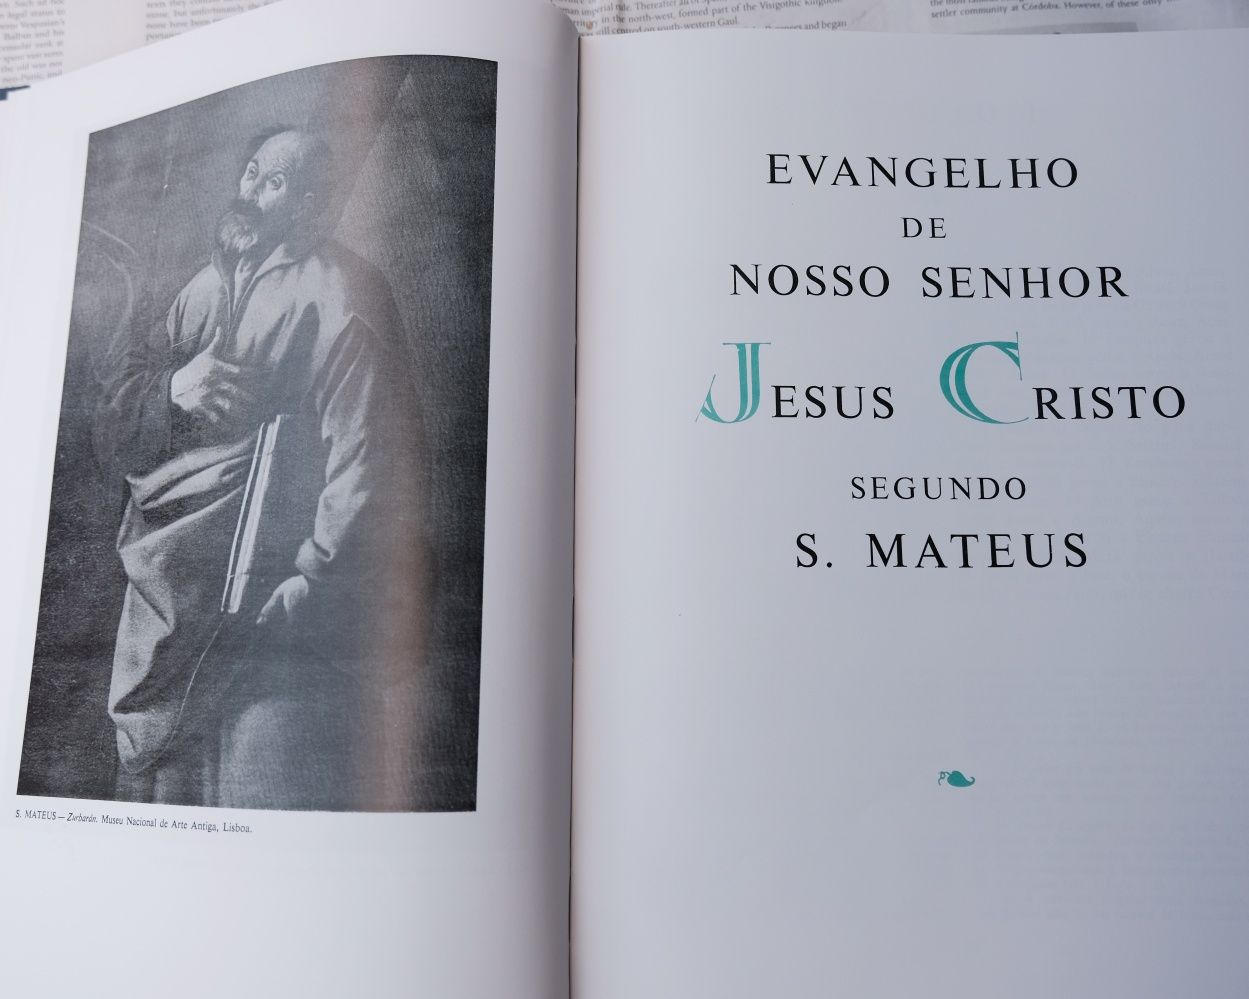 Bíblia sagrada ilustrada, novo e antigo testamento, 7 volumes - NOVOS